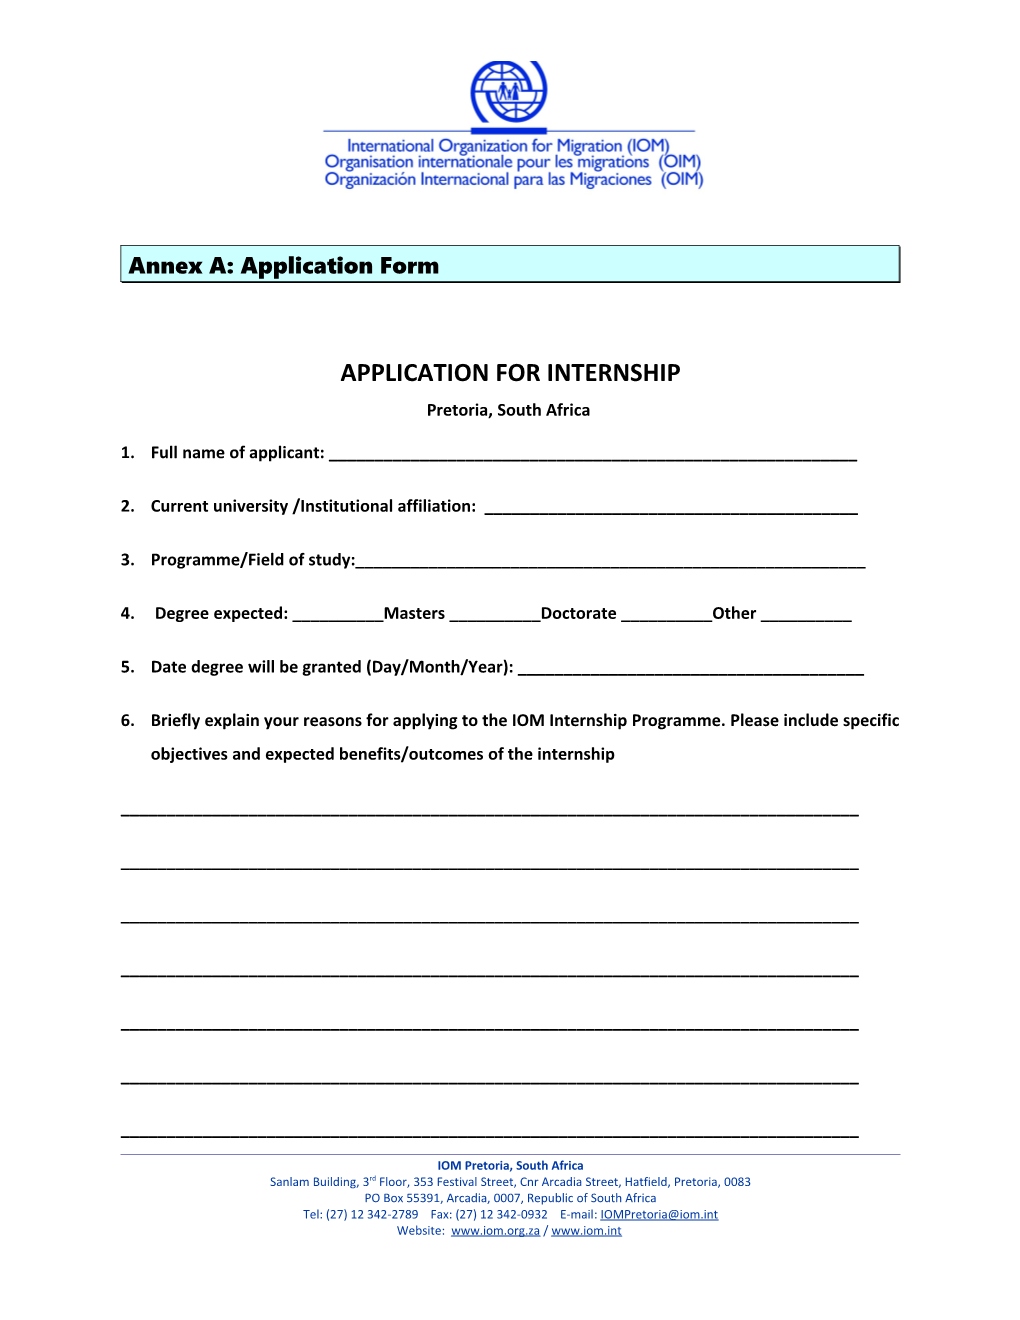 Annex A: Application Form